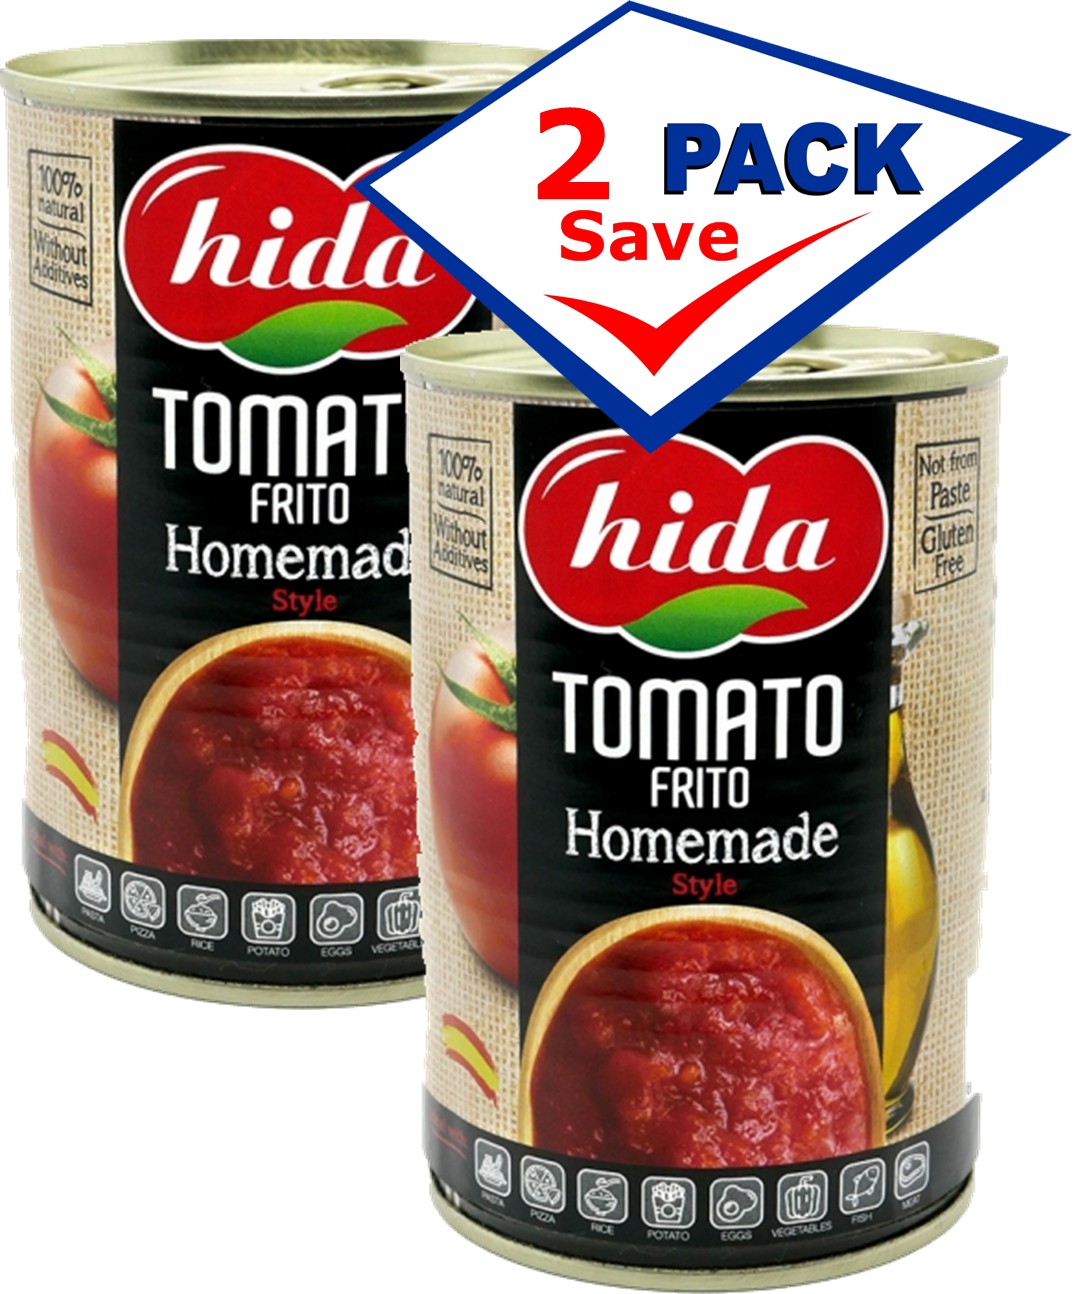 Hida Tomate Frito Fried Tomato 14 oz Pack of 2